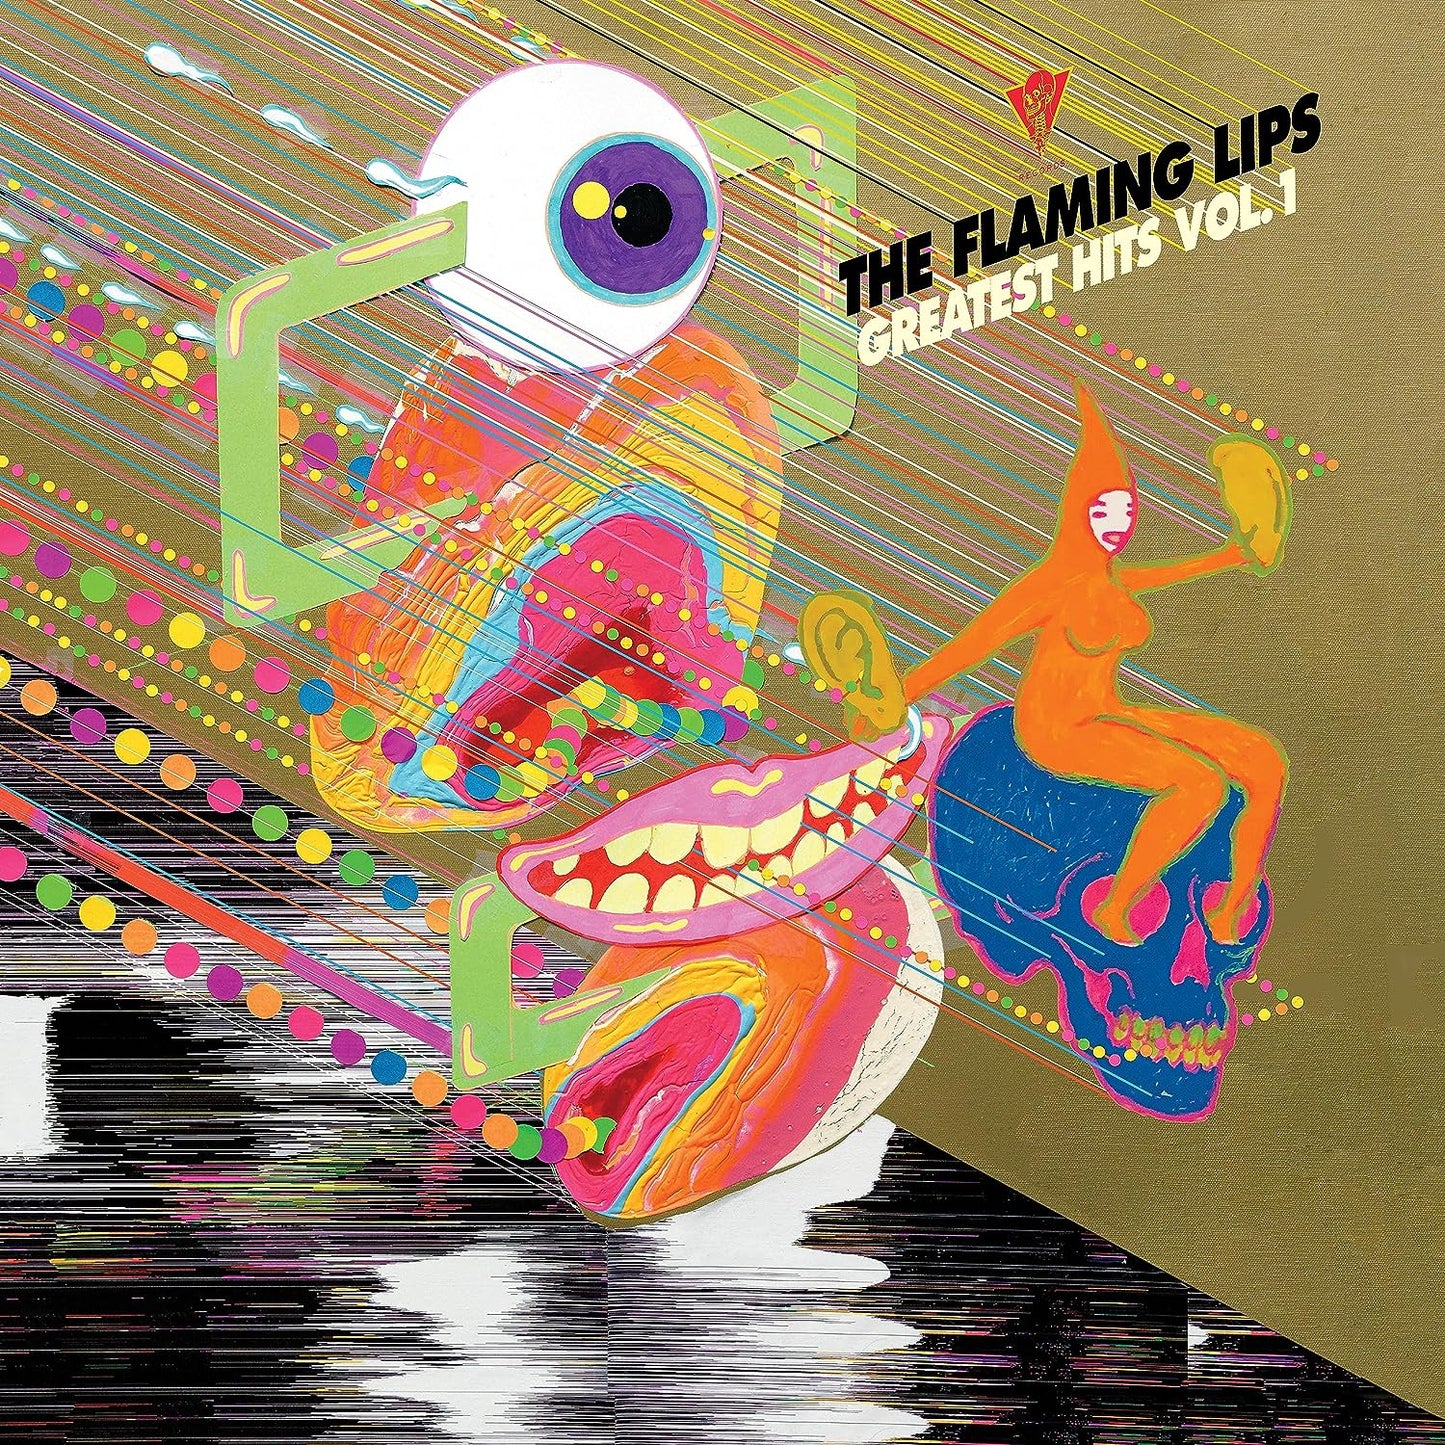 Flaming Lips Greatest Hits, Vol. 1 (Gold Vinyl LP)